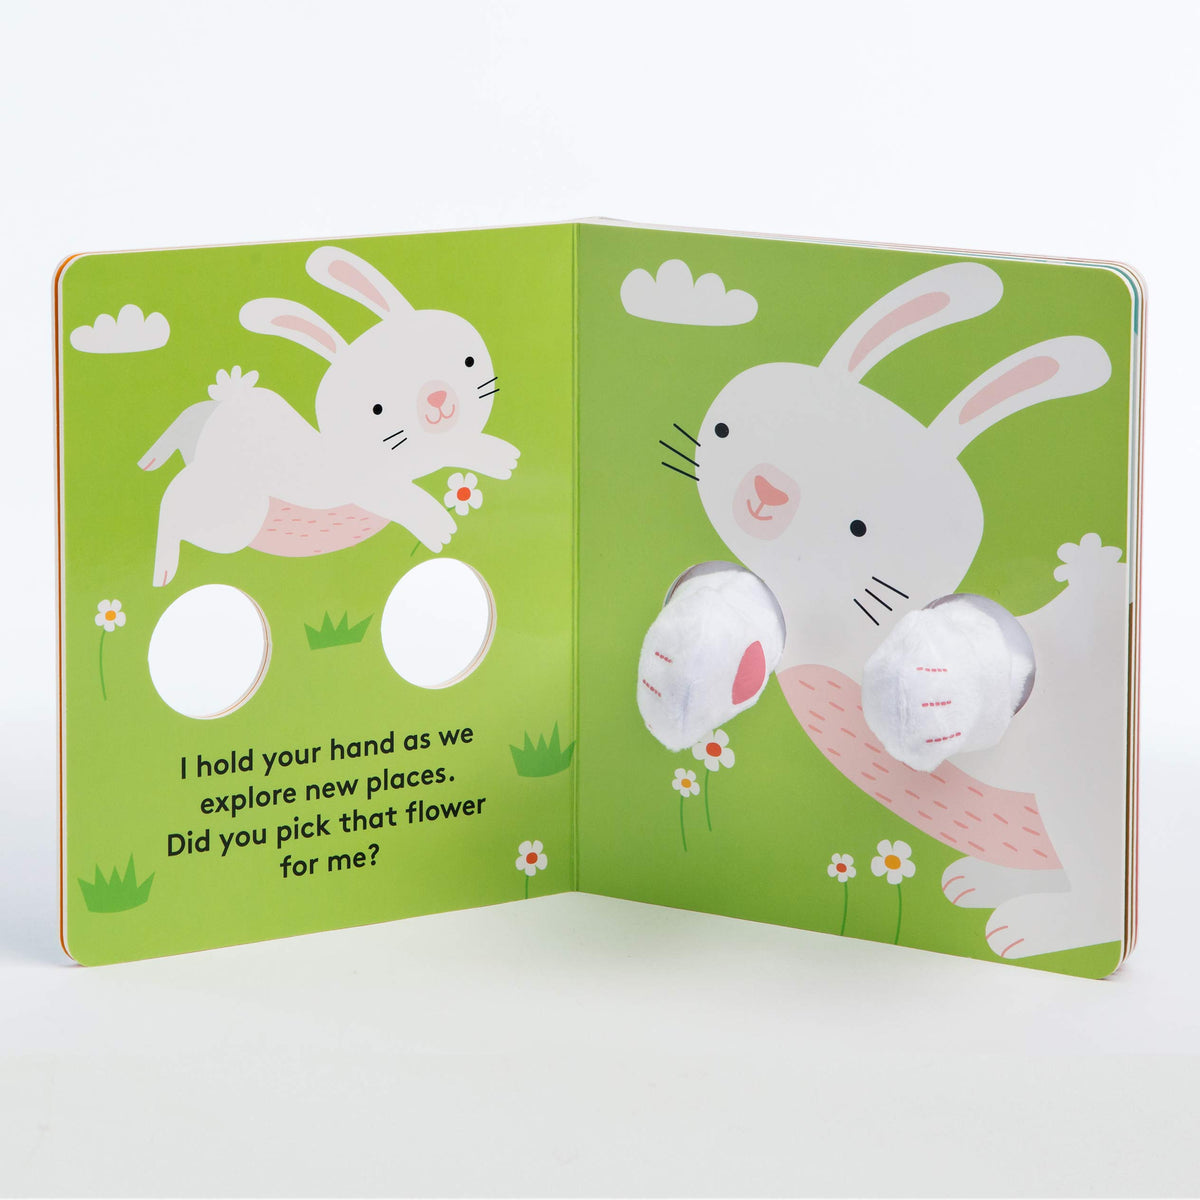 Hug Me Little Bunny Board Book